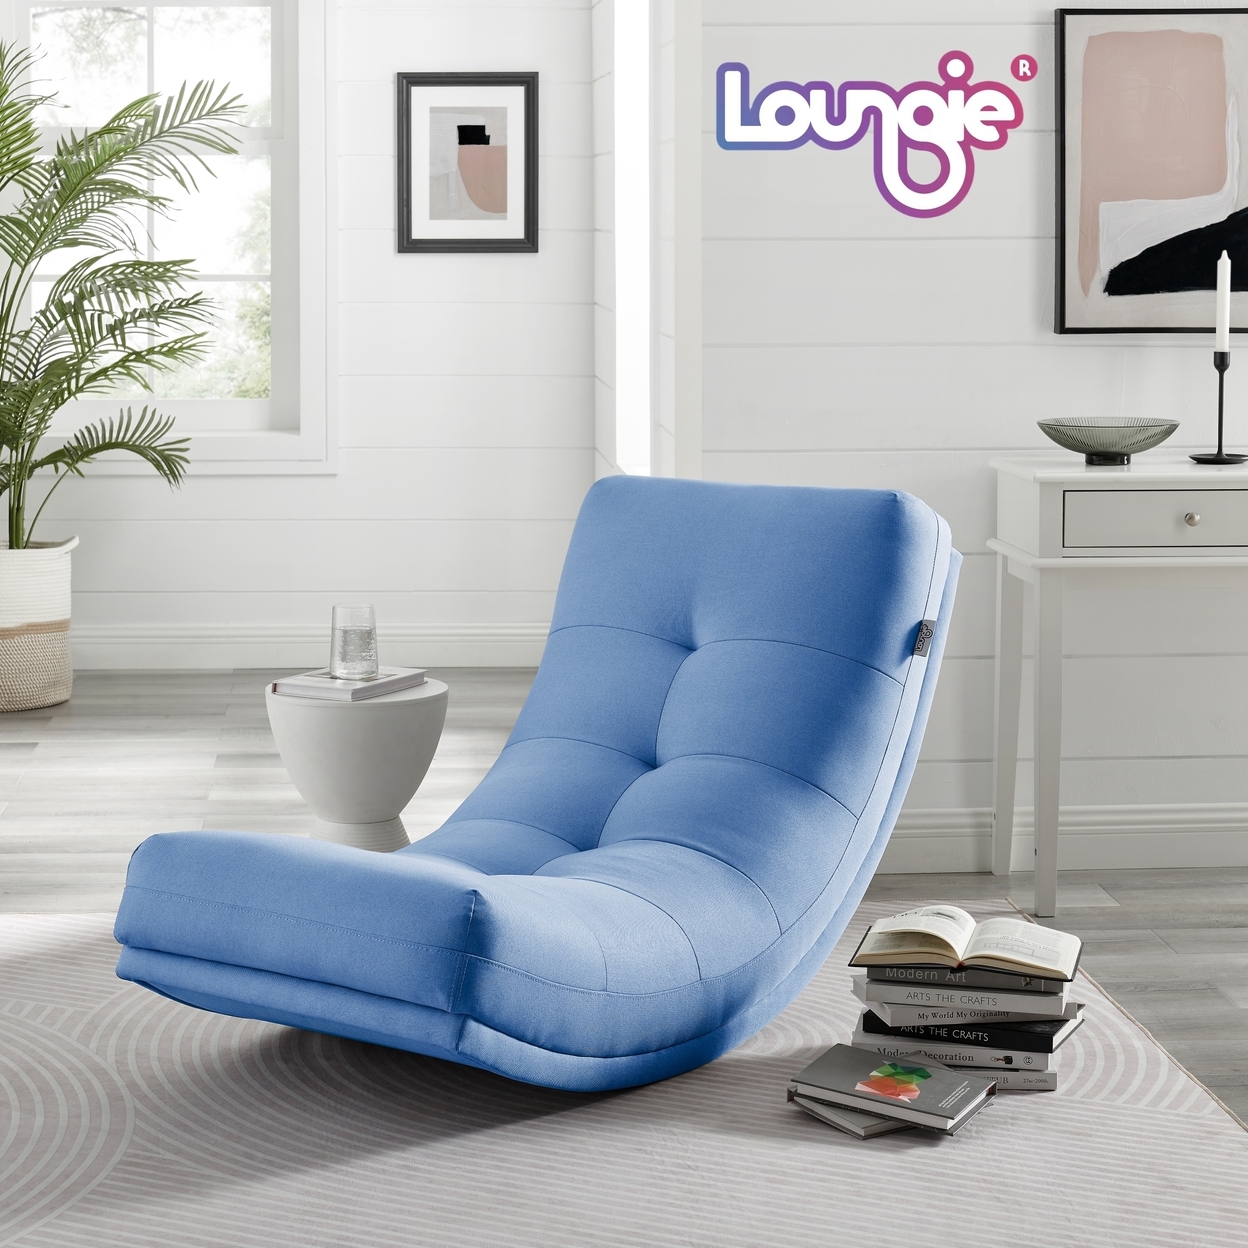 Kaniya Chair - Linen Upholstery, Tufted, Gentle Rocking Design, Ergonomic Shape And Padded Seat - Grey